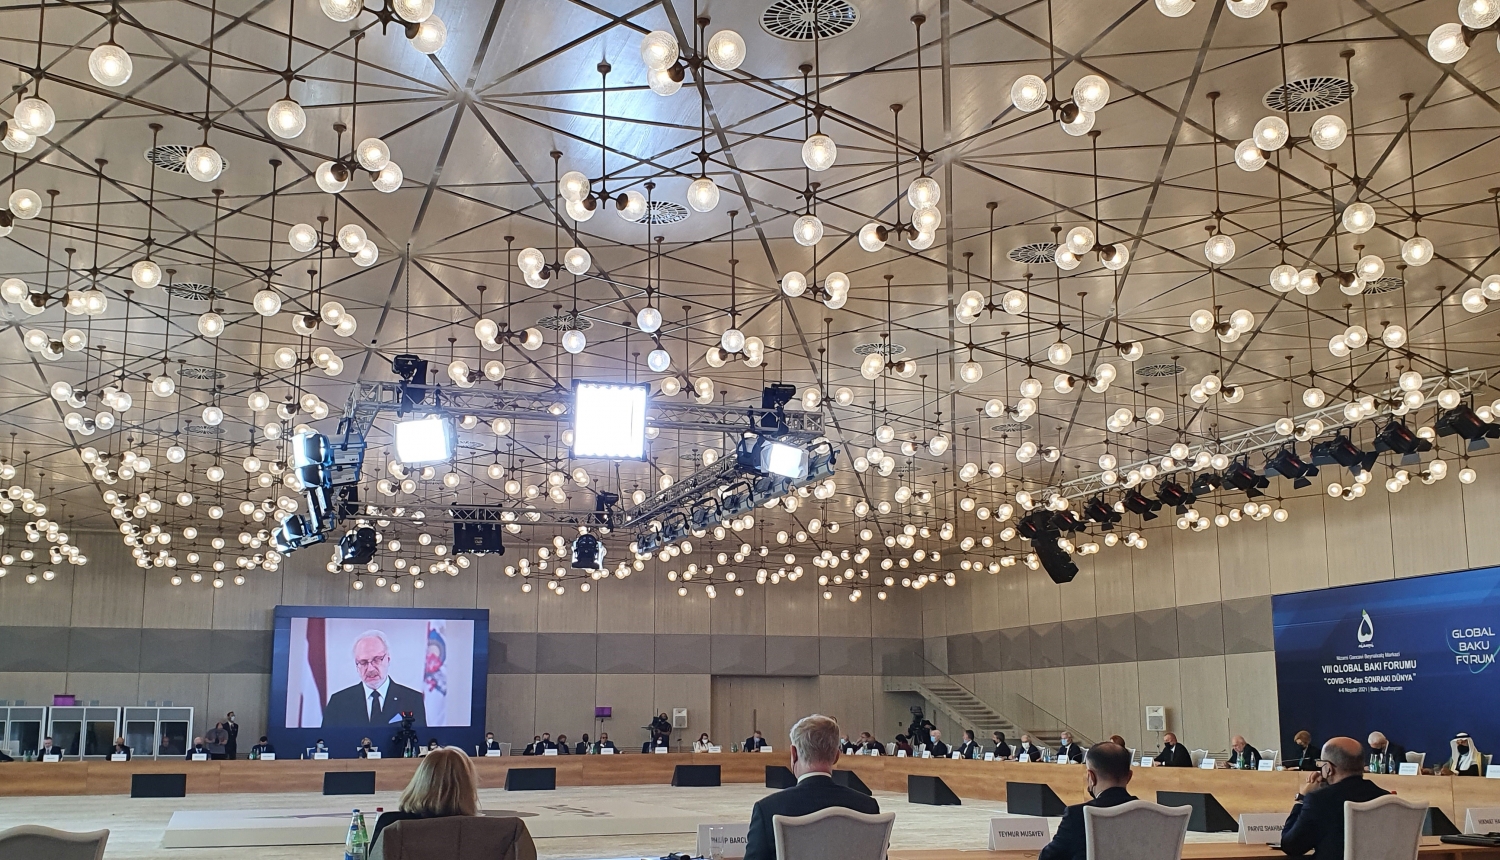 Baku foruma zāle, televizora ekrānā redzama Valsts prezidenta videouzruna